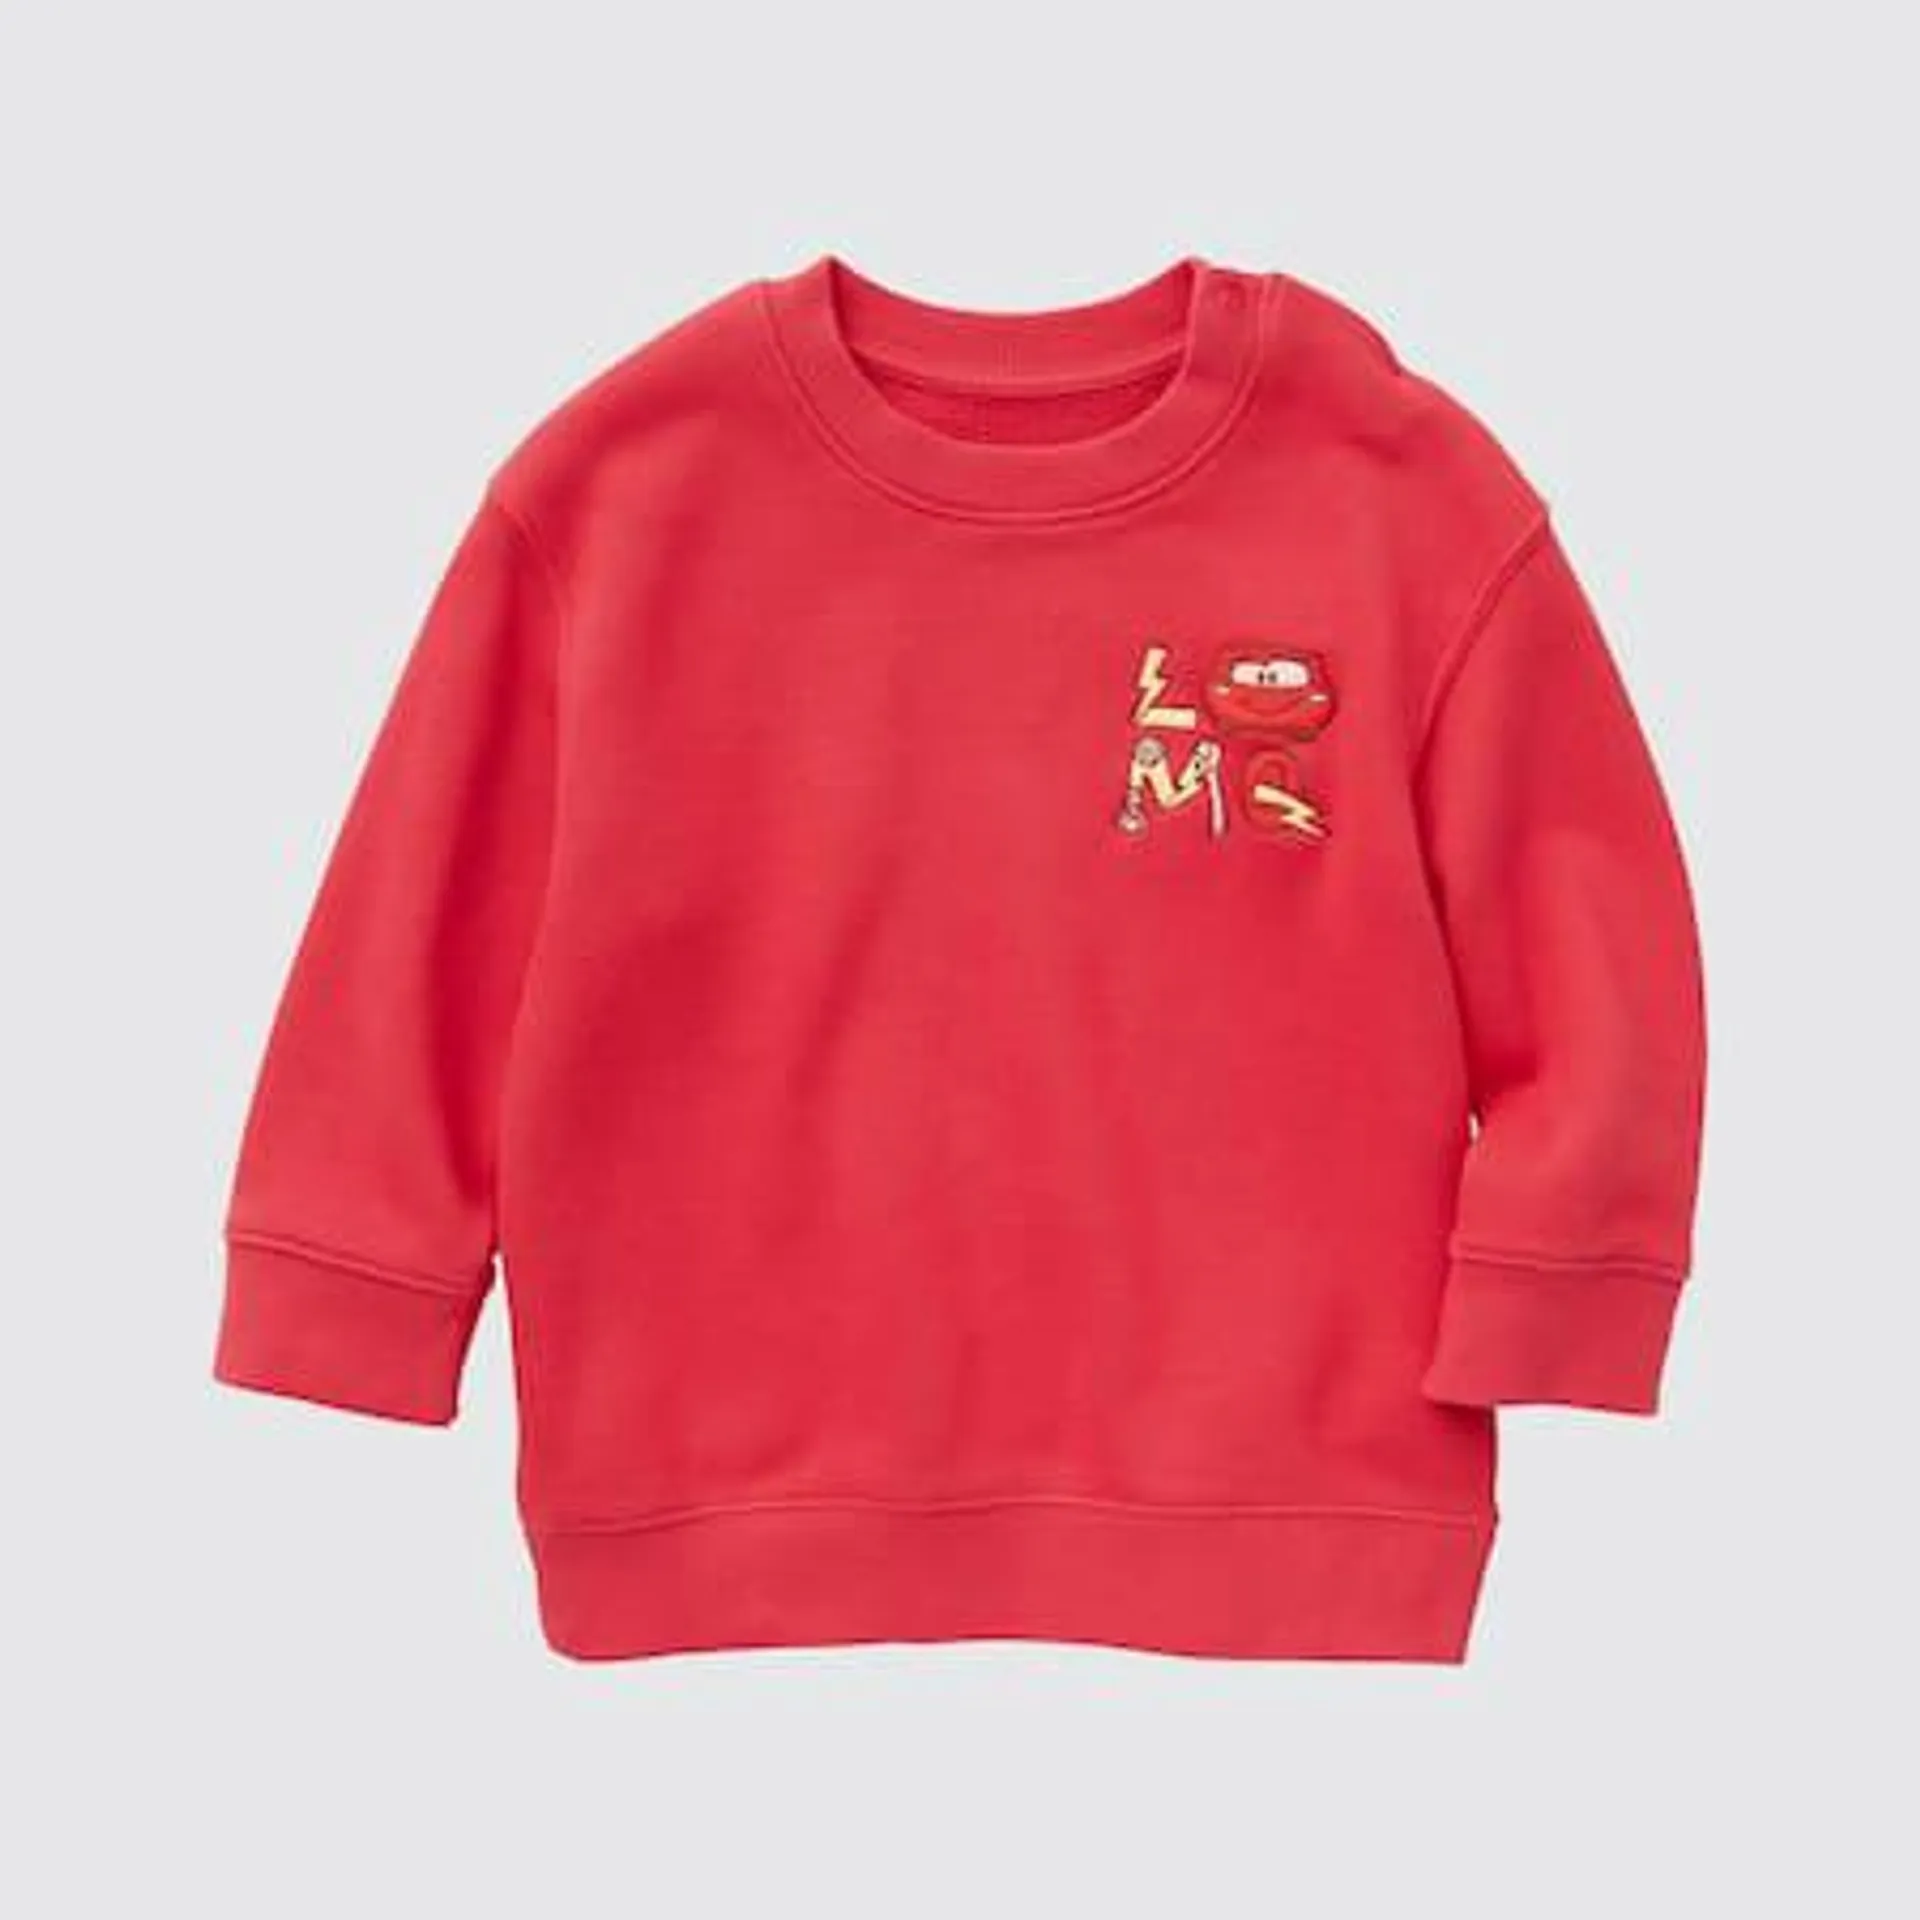 Toddler Pixar Collection UT Graphic Sweatshirt